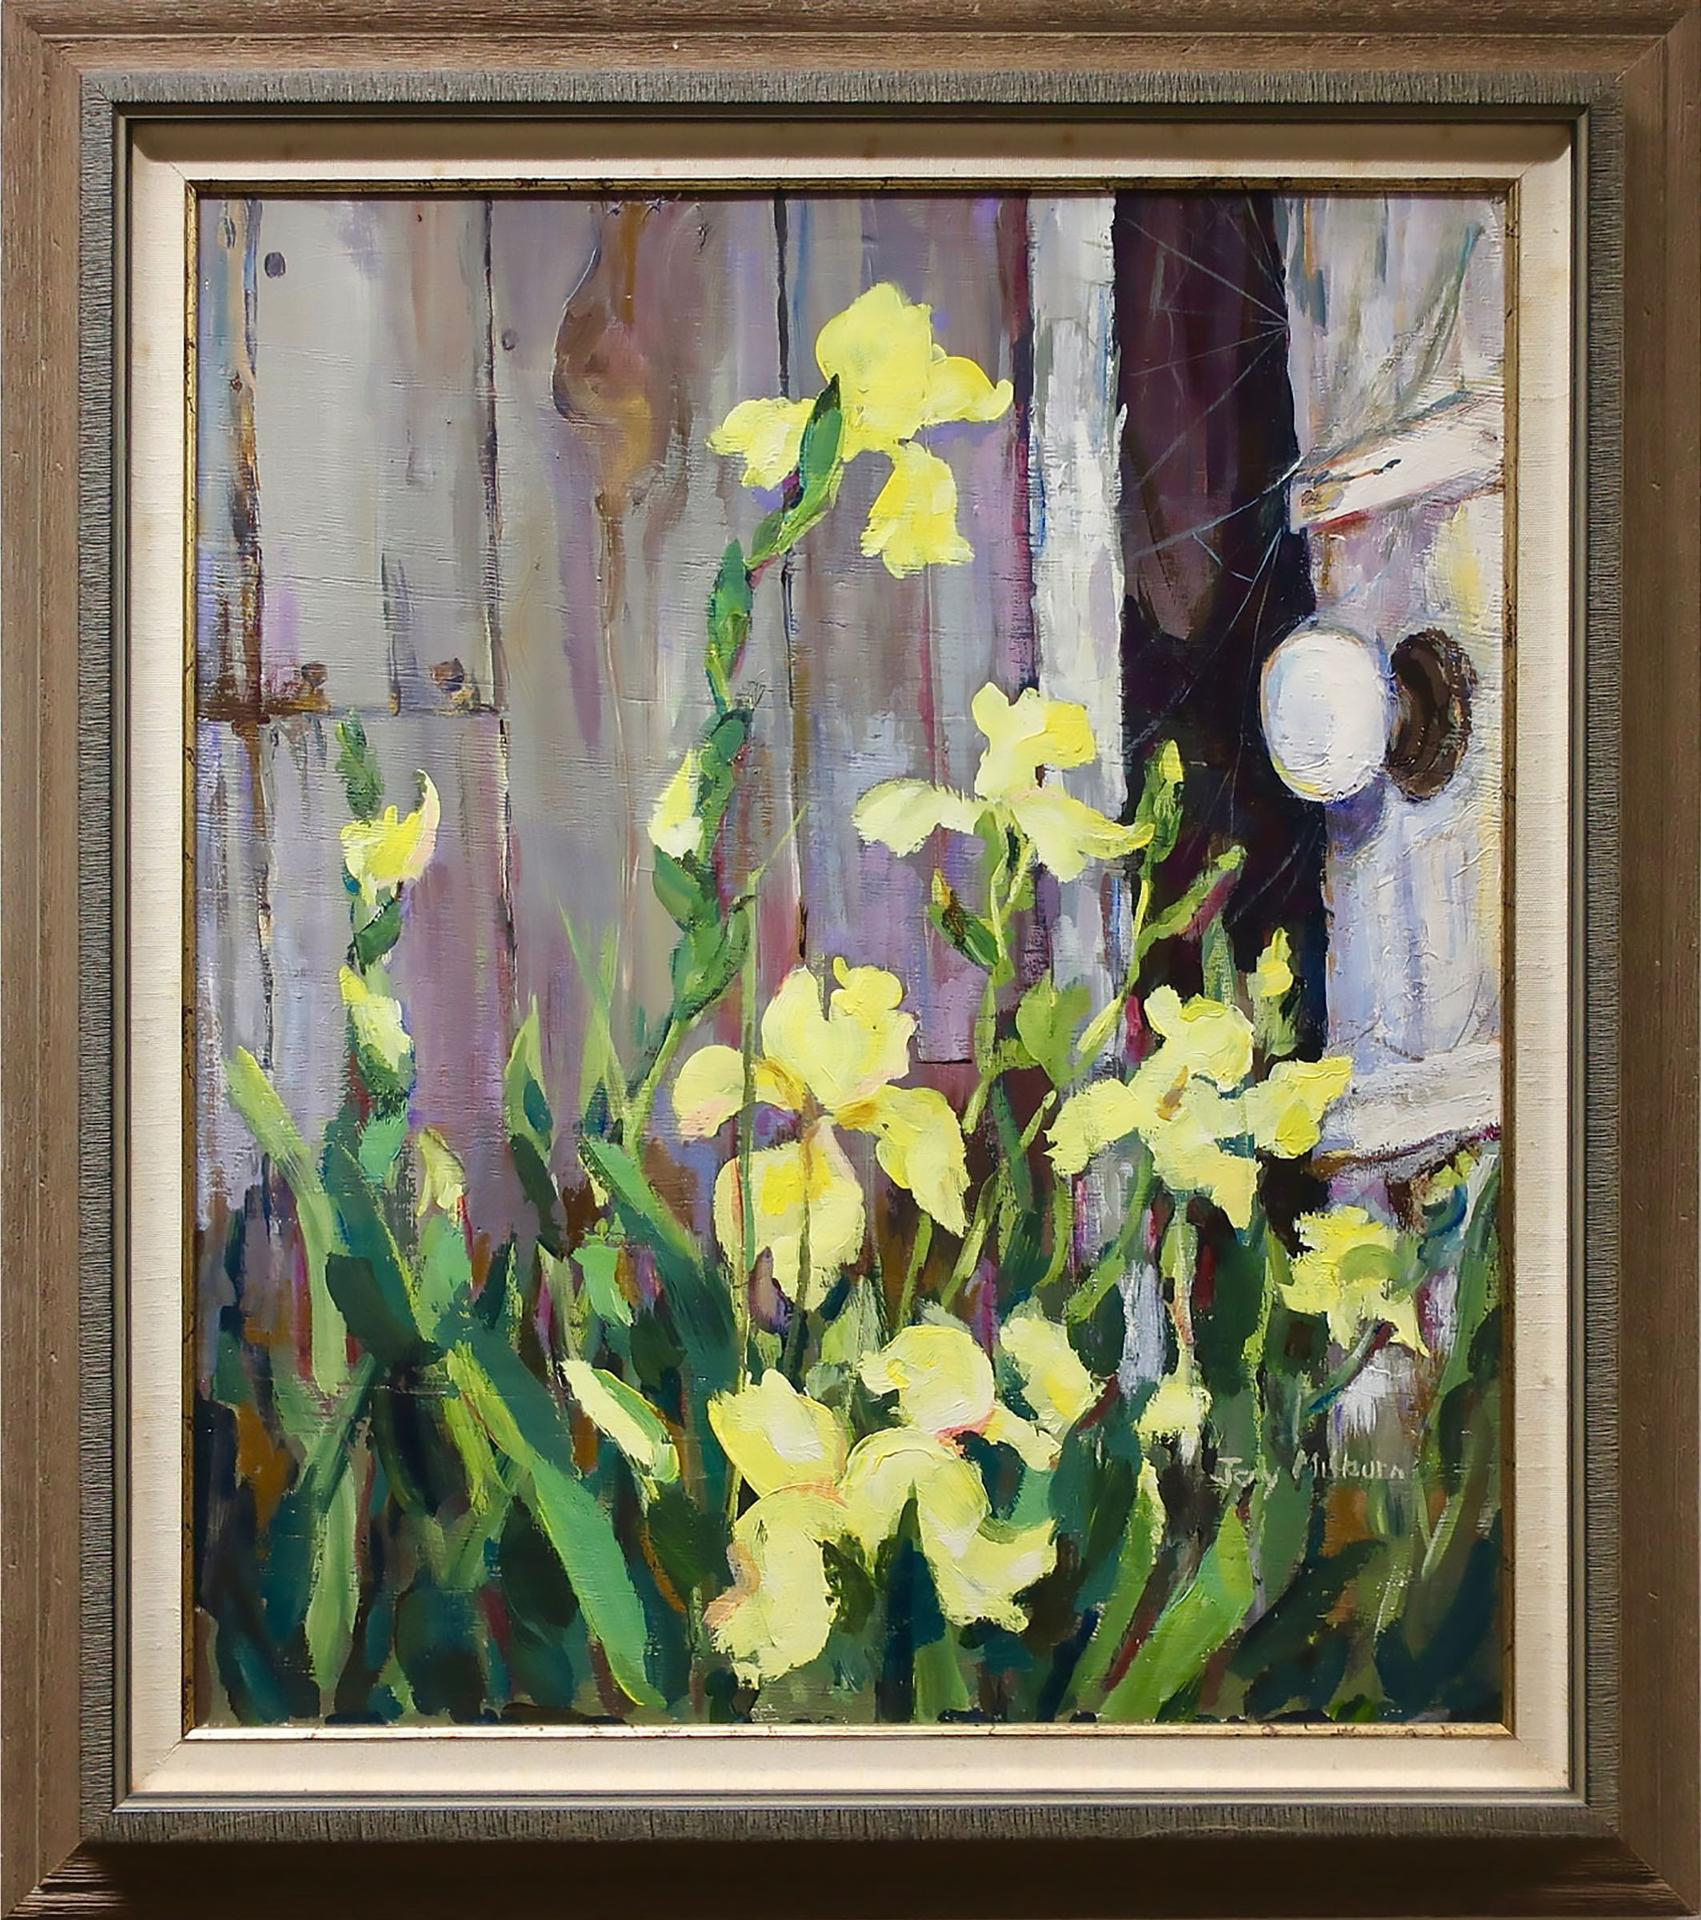 Joy Milburn - Untitled (Yellow Flowers)